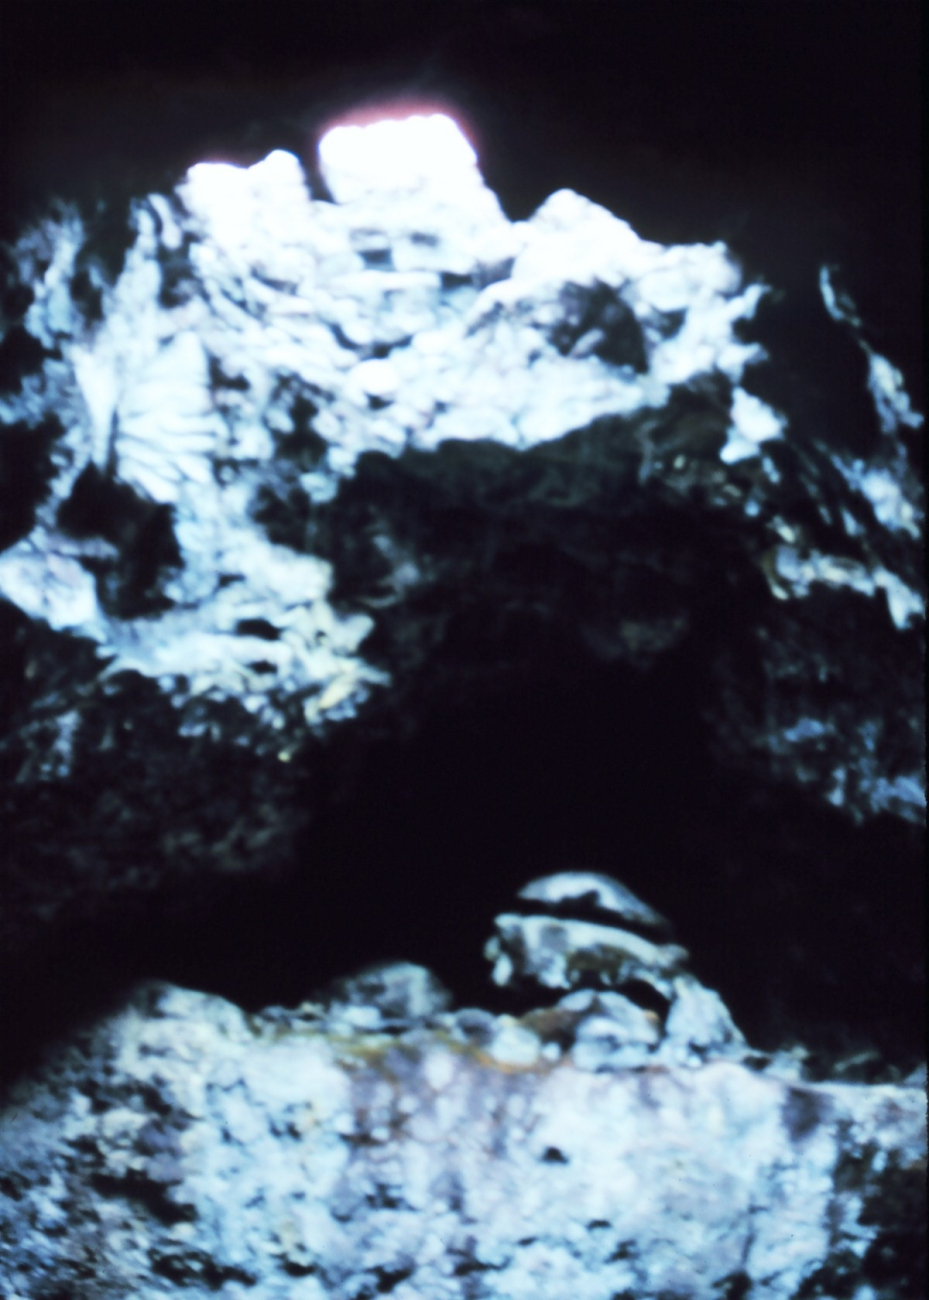 Inside a lava tube